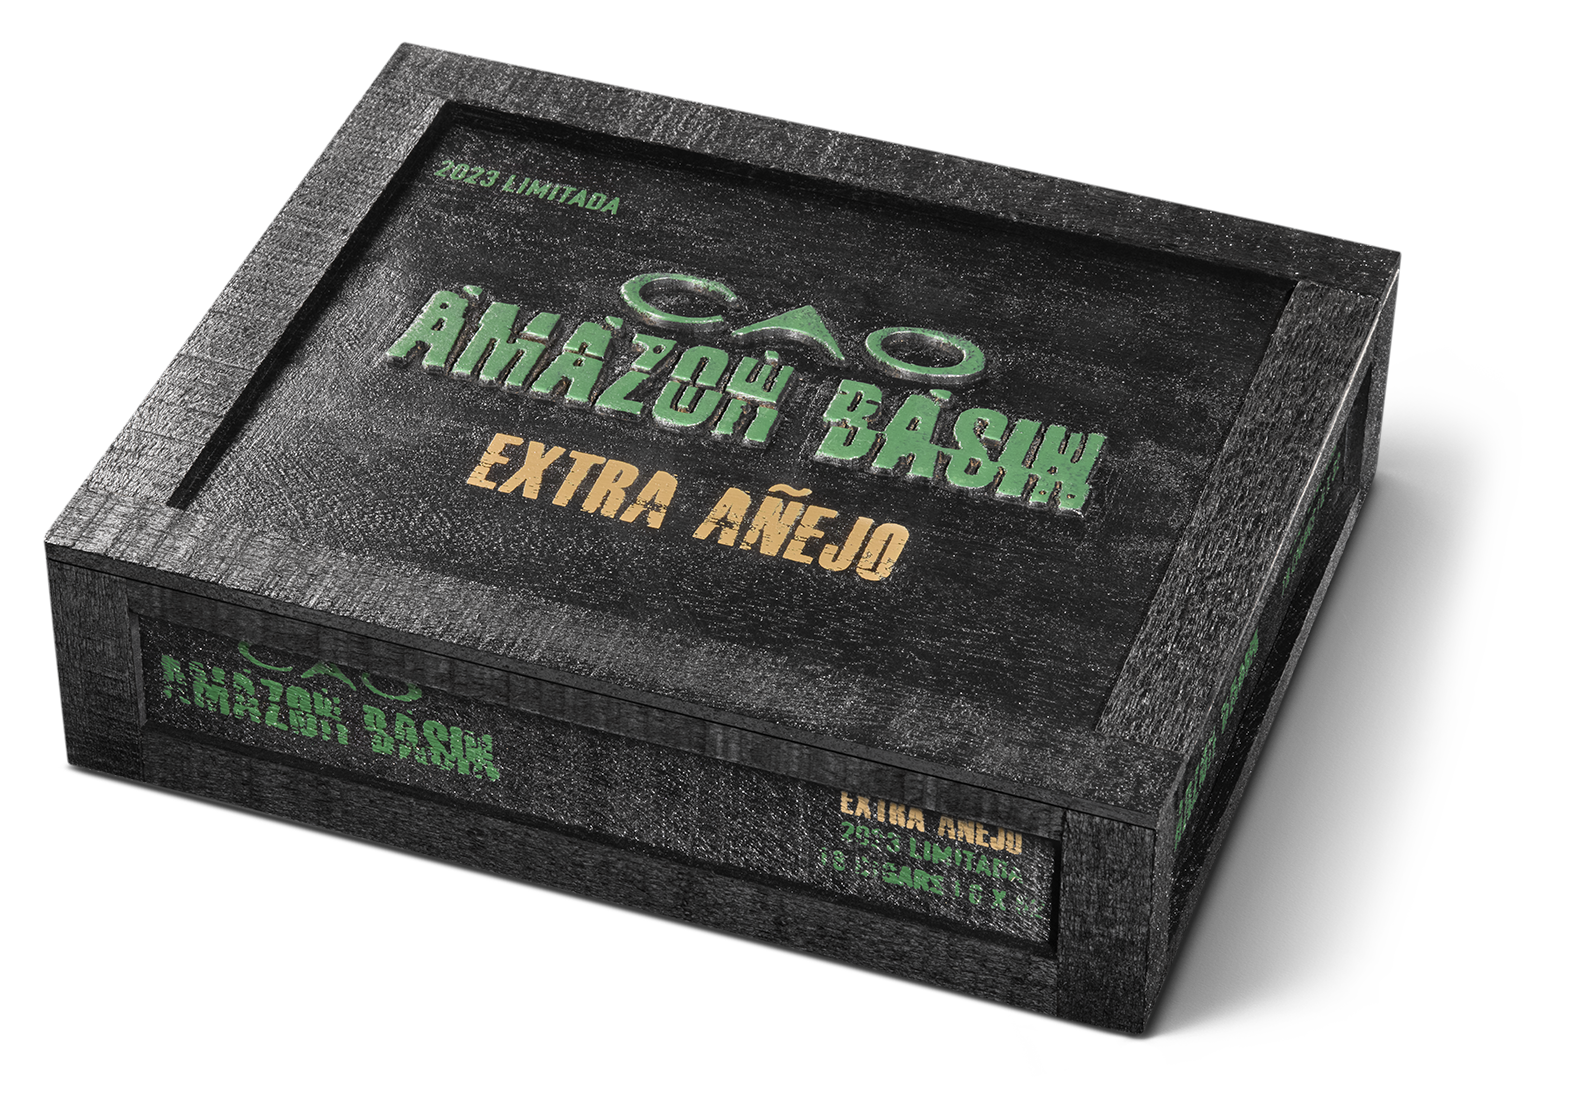 Amazon Basin Extra AÑEJO To Debut January 2023